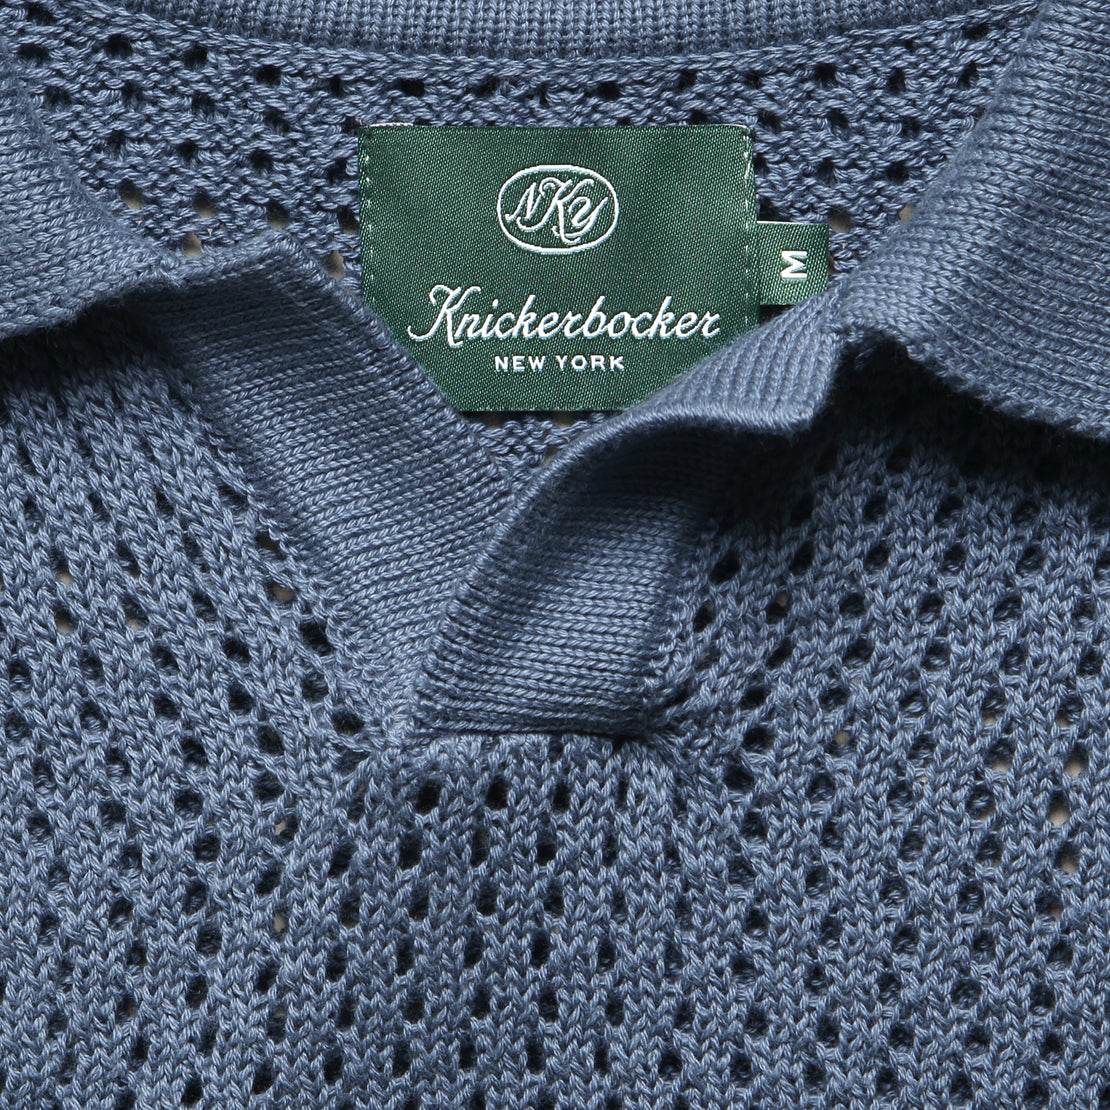 Yuma Polo - Blue - Knickerbocker - STAG Provisions - Tops - S/S Knit